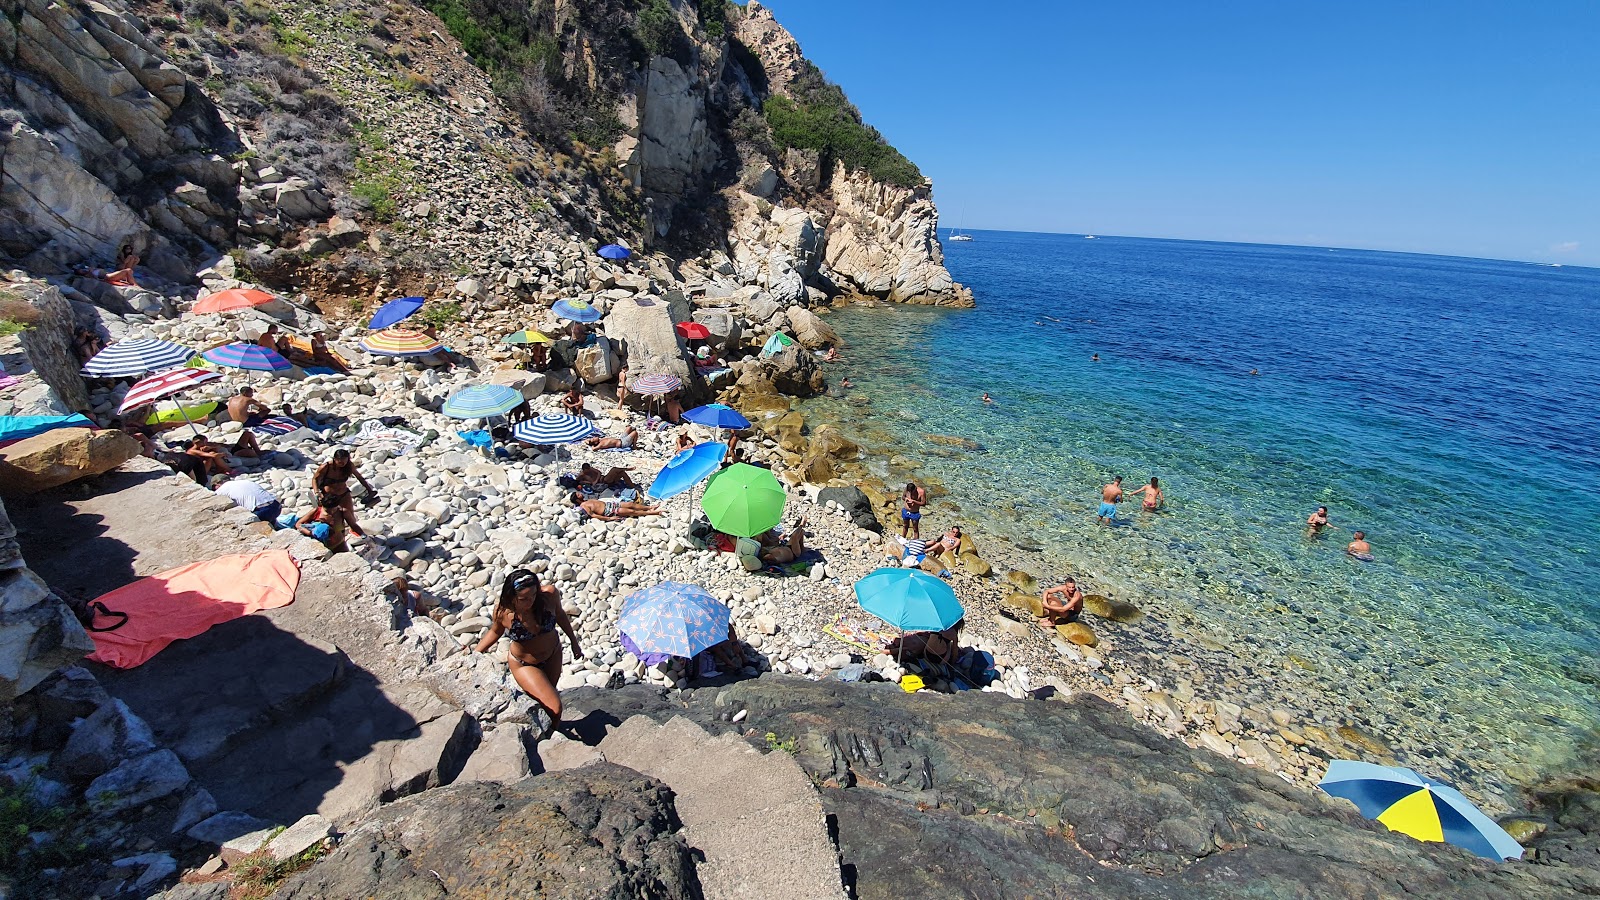 Foto de Spiaggia della Crocetta com pedras superfície